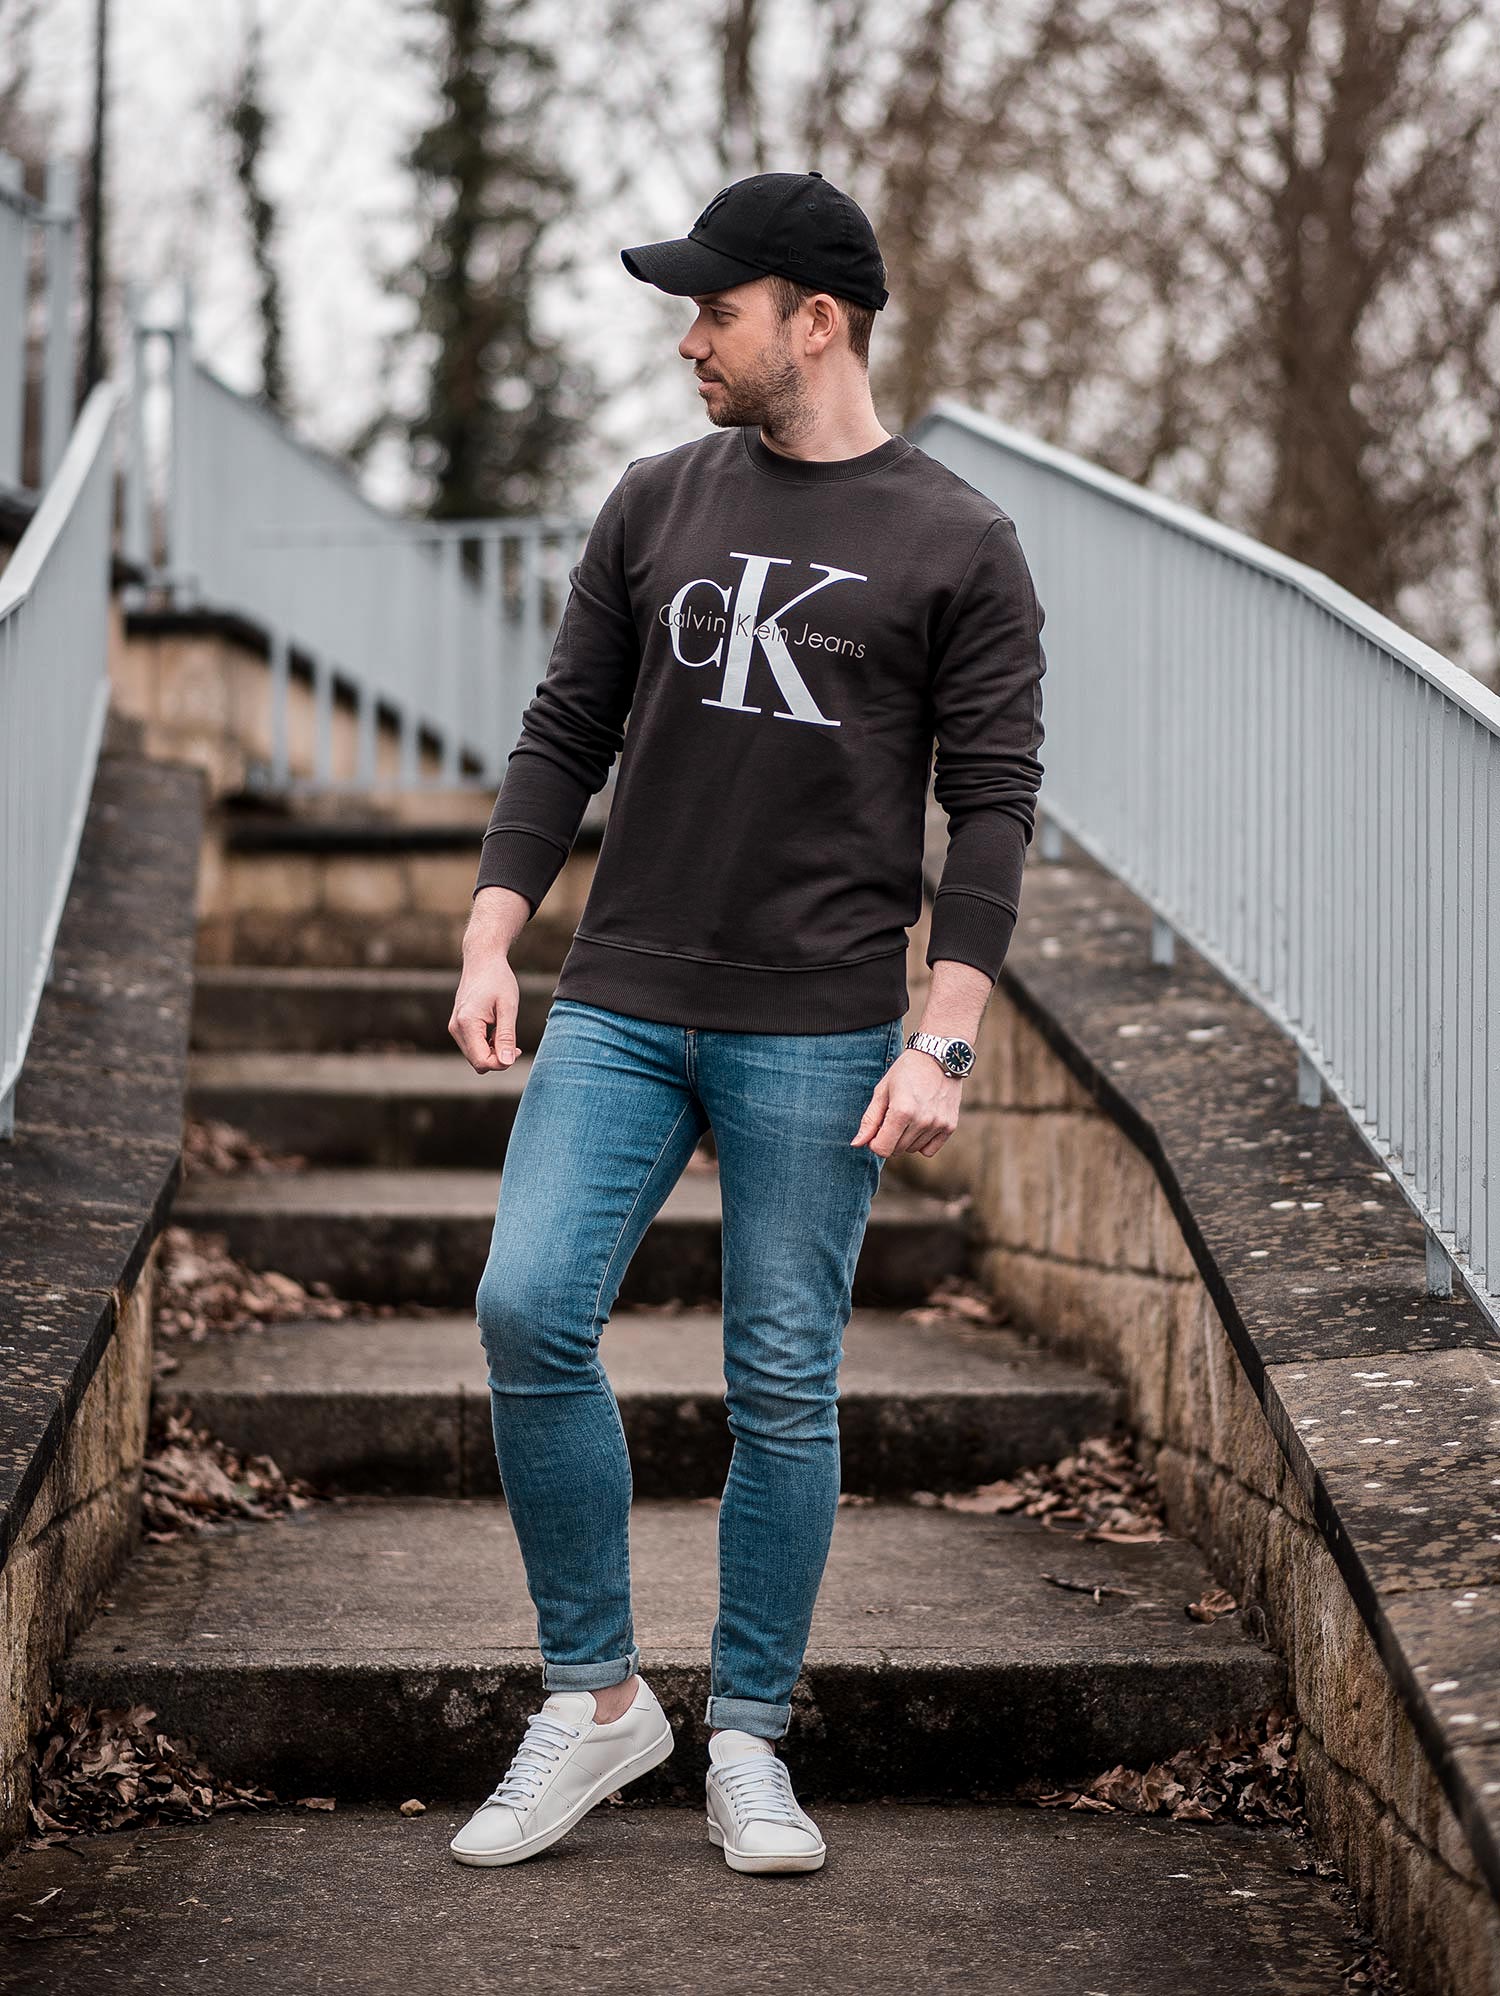 Calvin Klein Sweatshirt Outfit Throwback | Your Average Guy